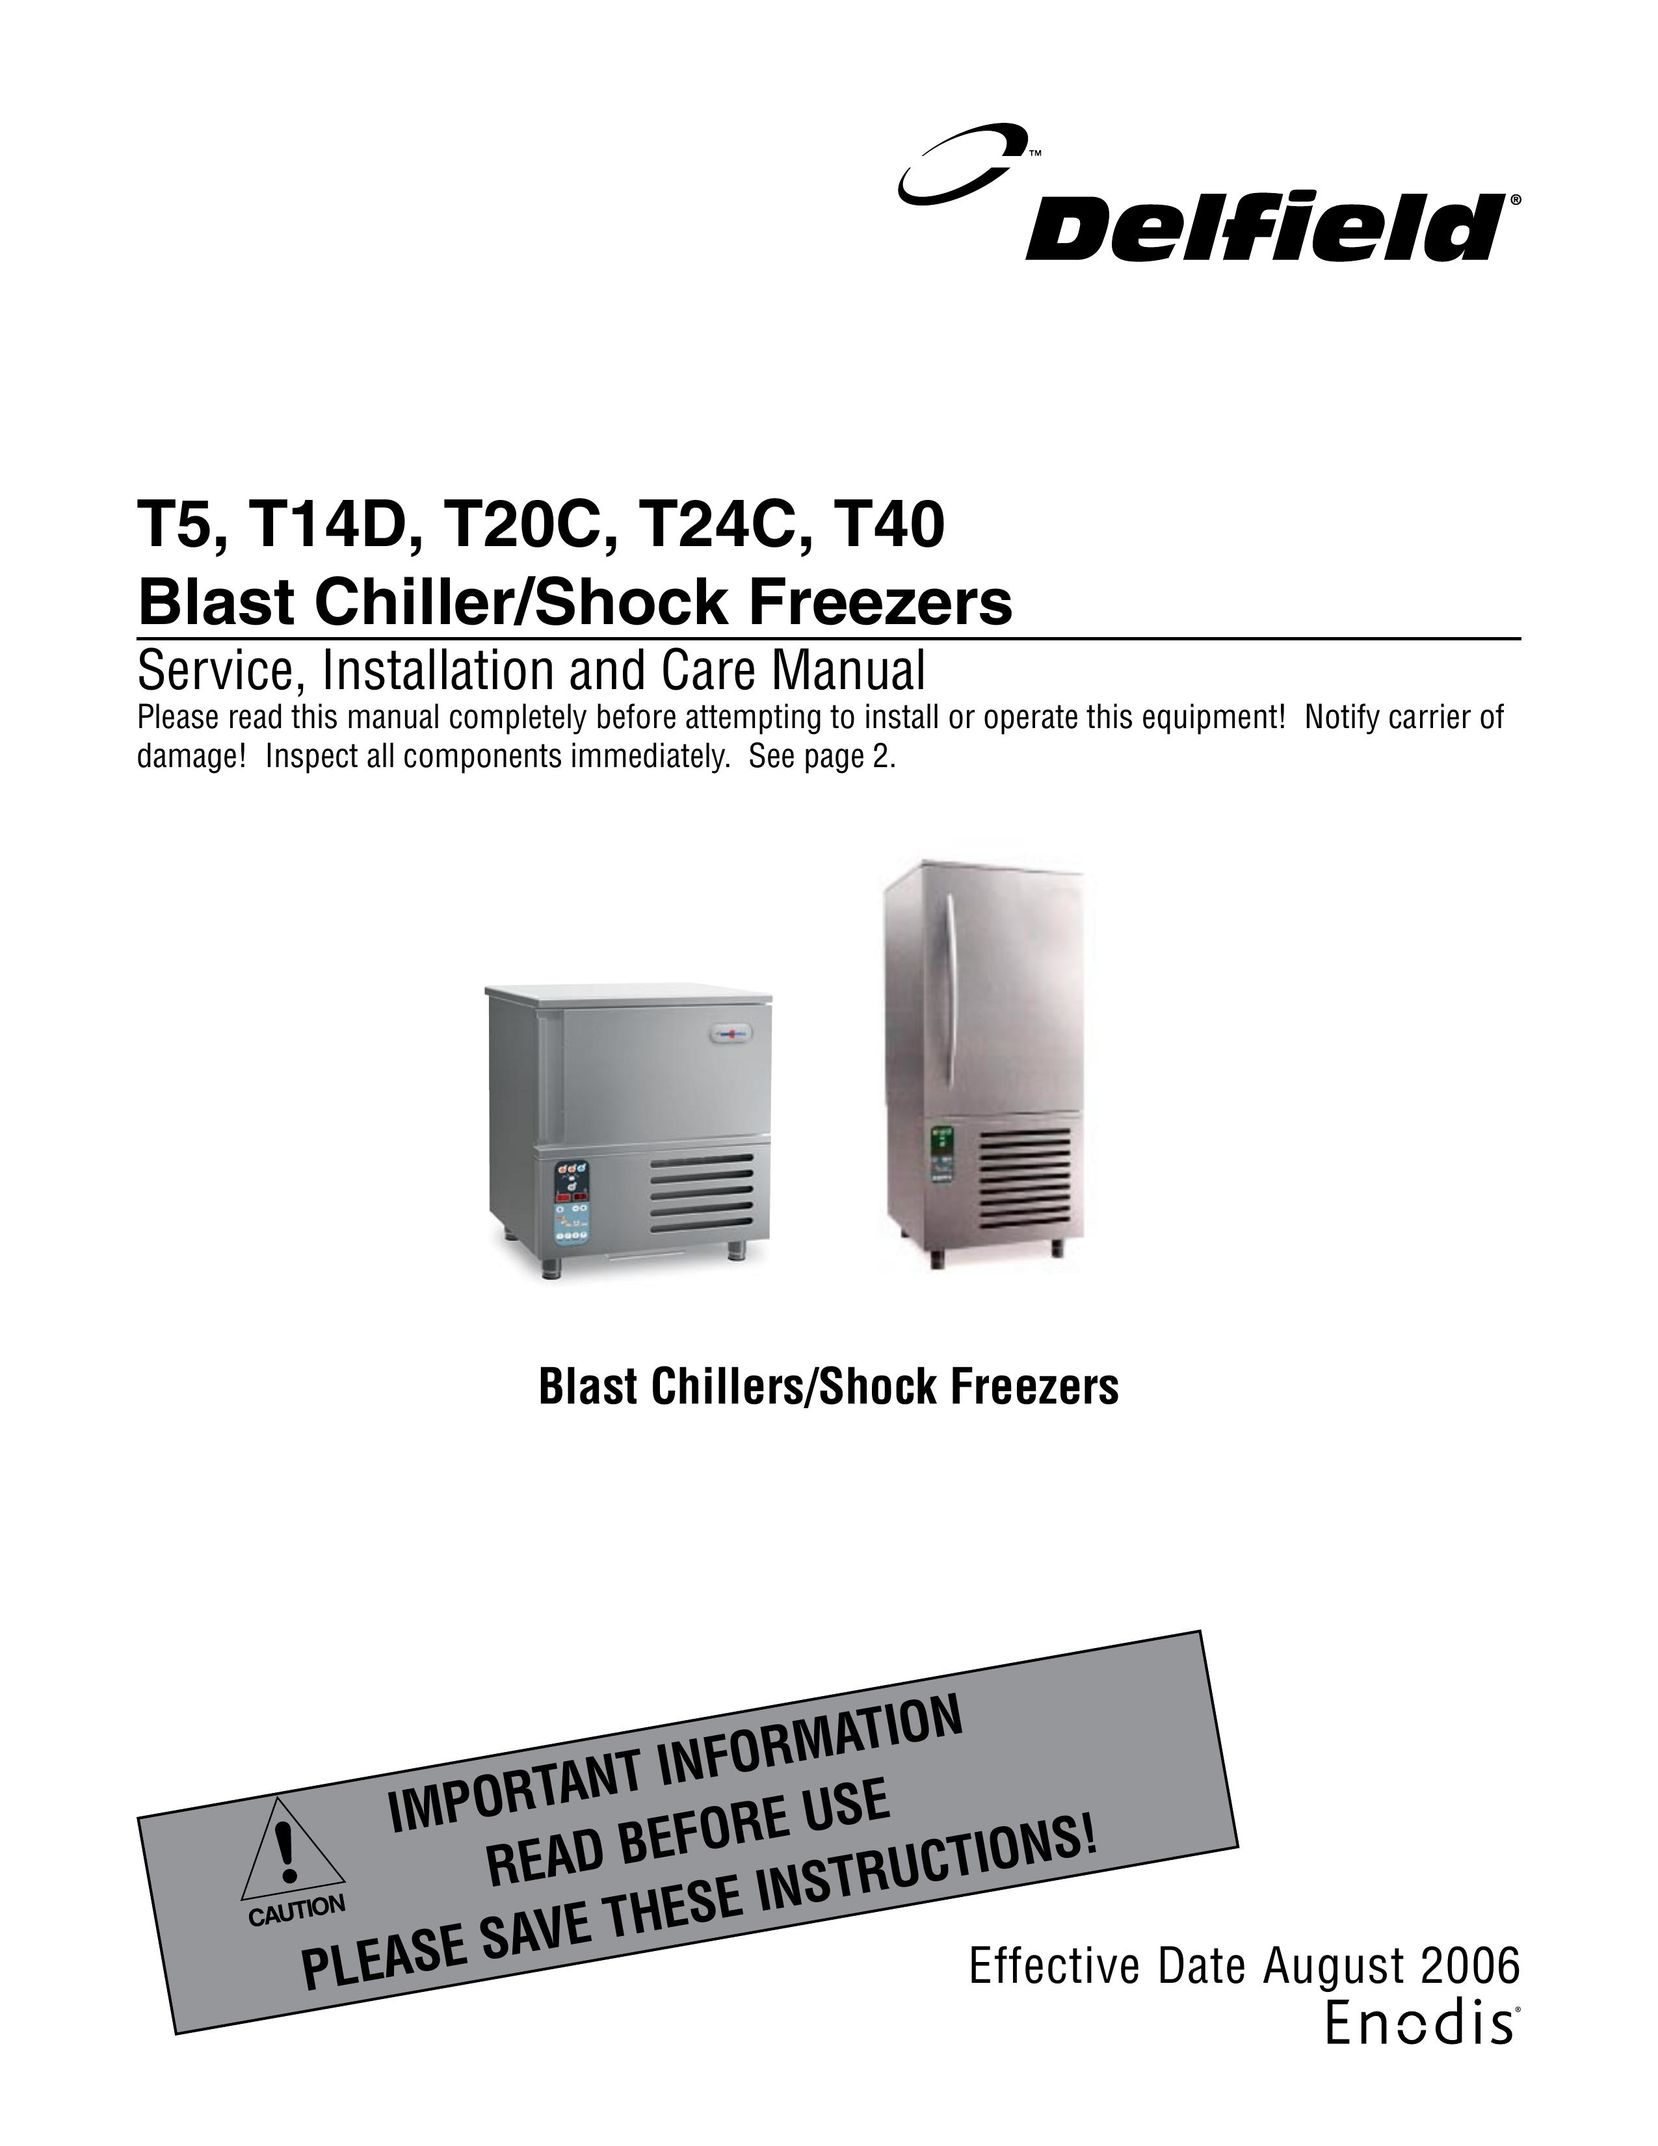 Delfield T14D Freezer User Manual